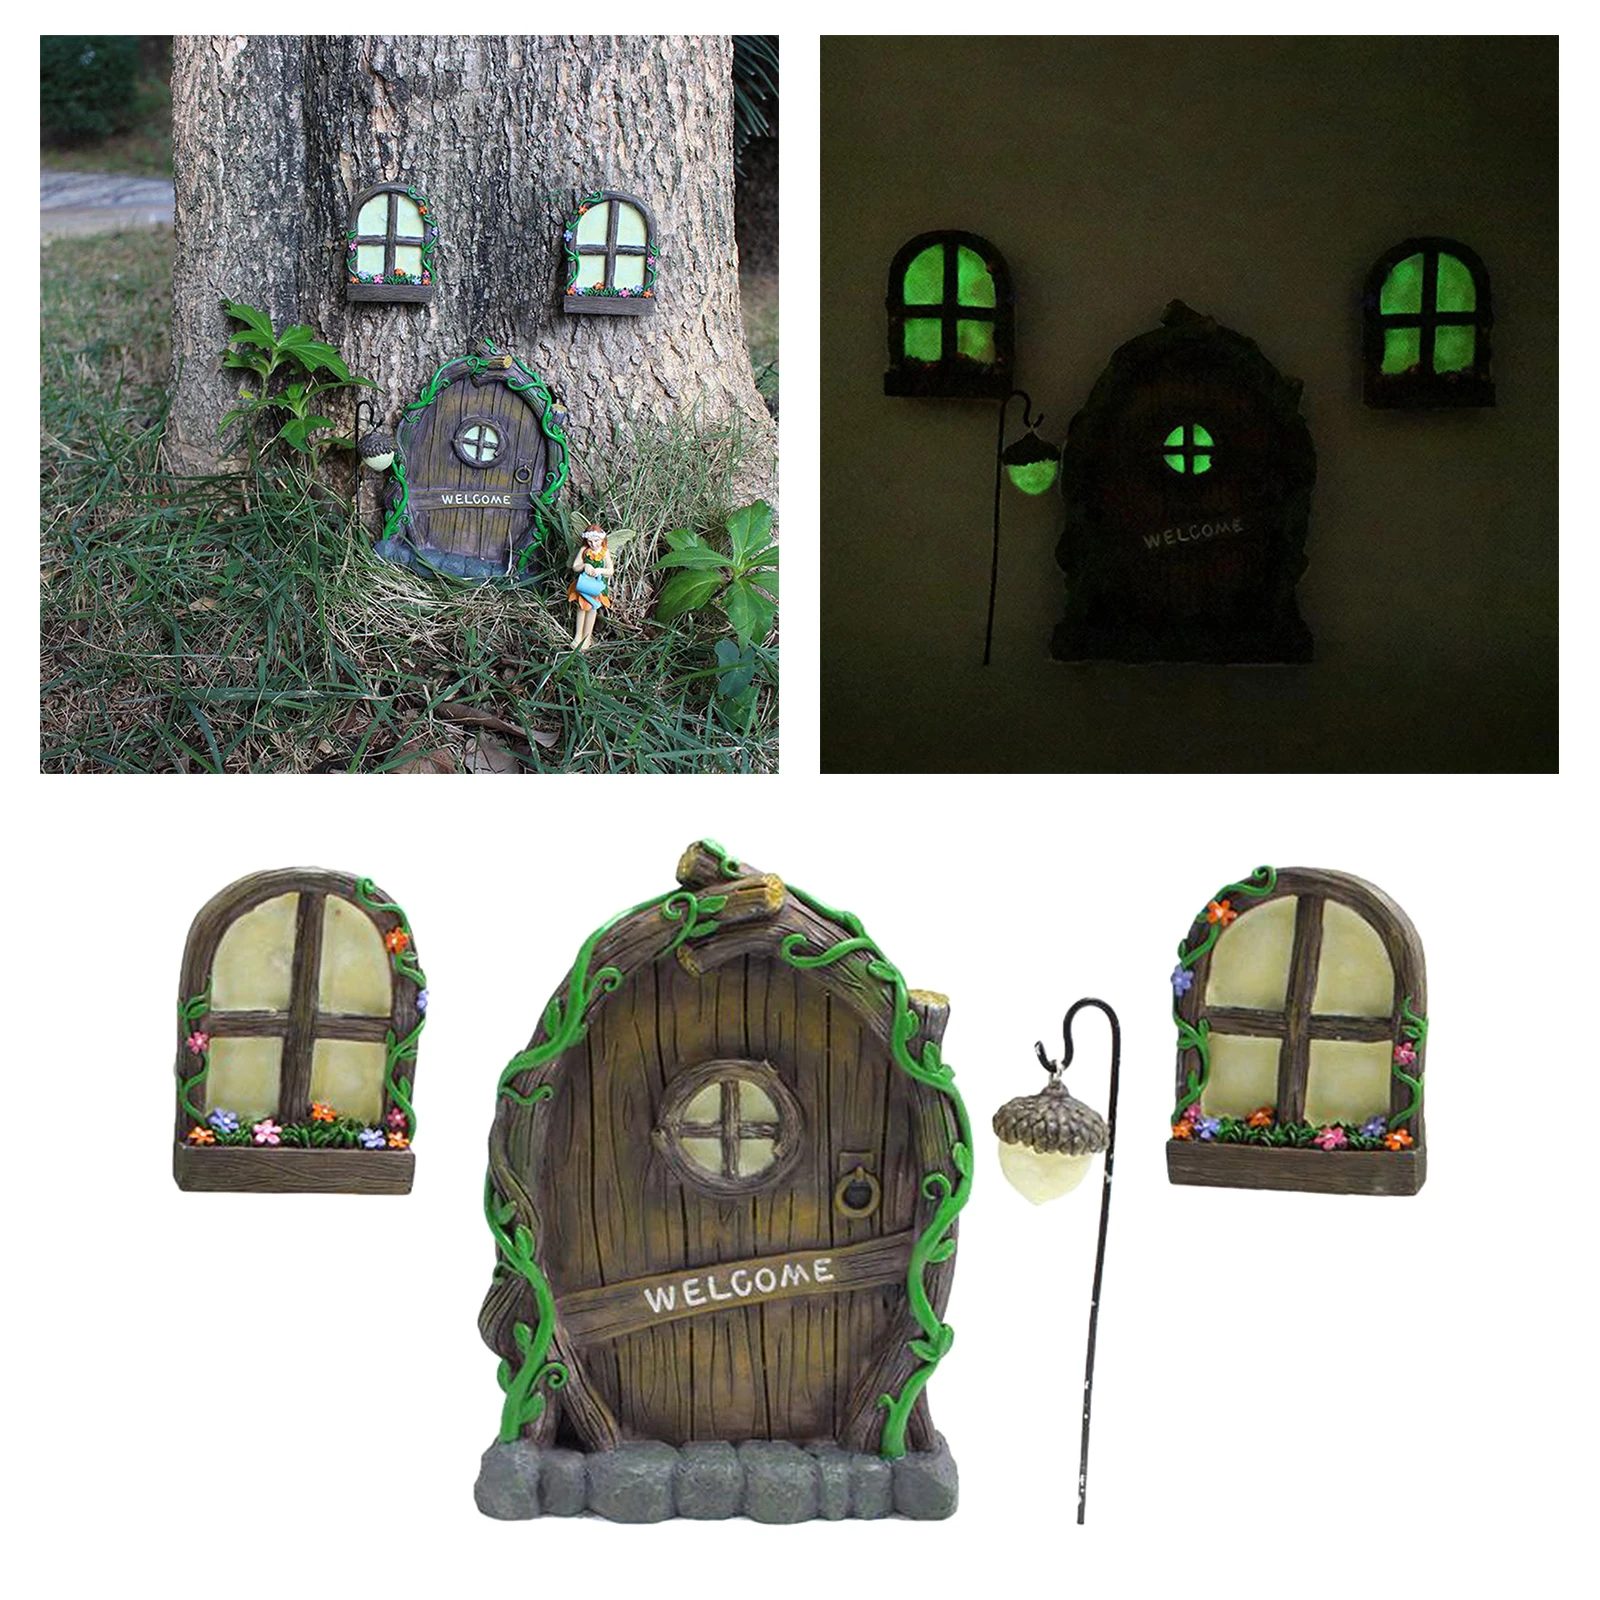 4pcs/set Cute Miniature Fairy Window and Door for Garden Decor Accessories